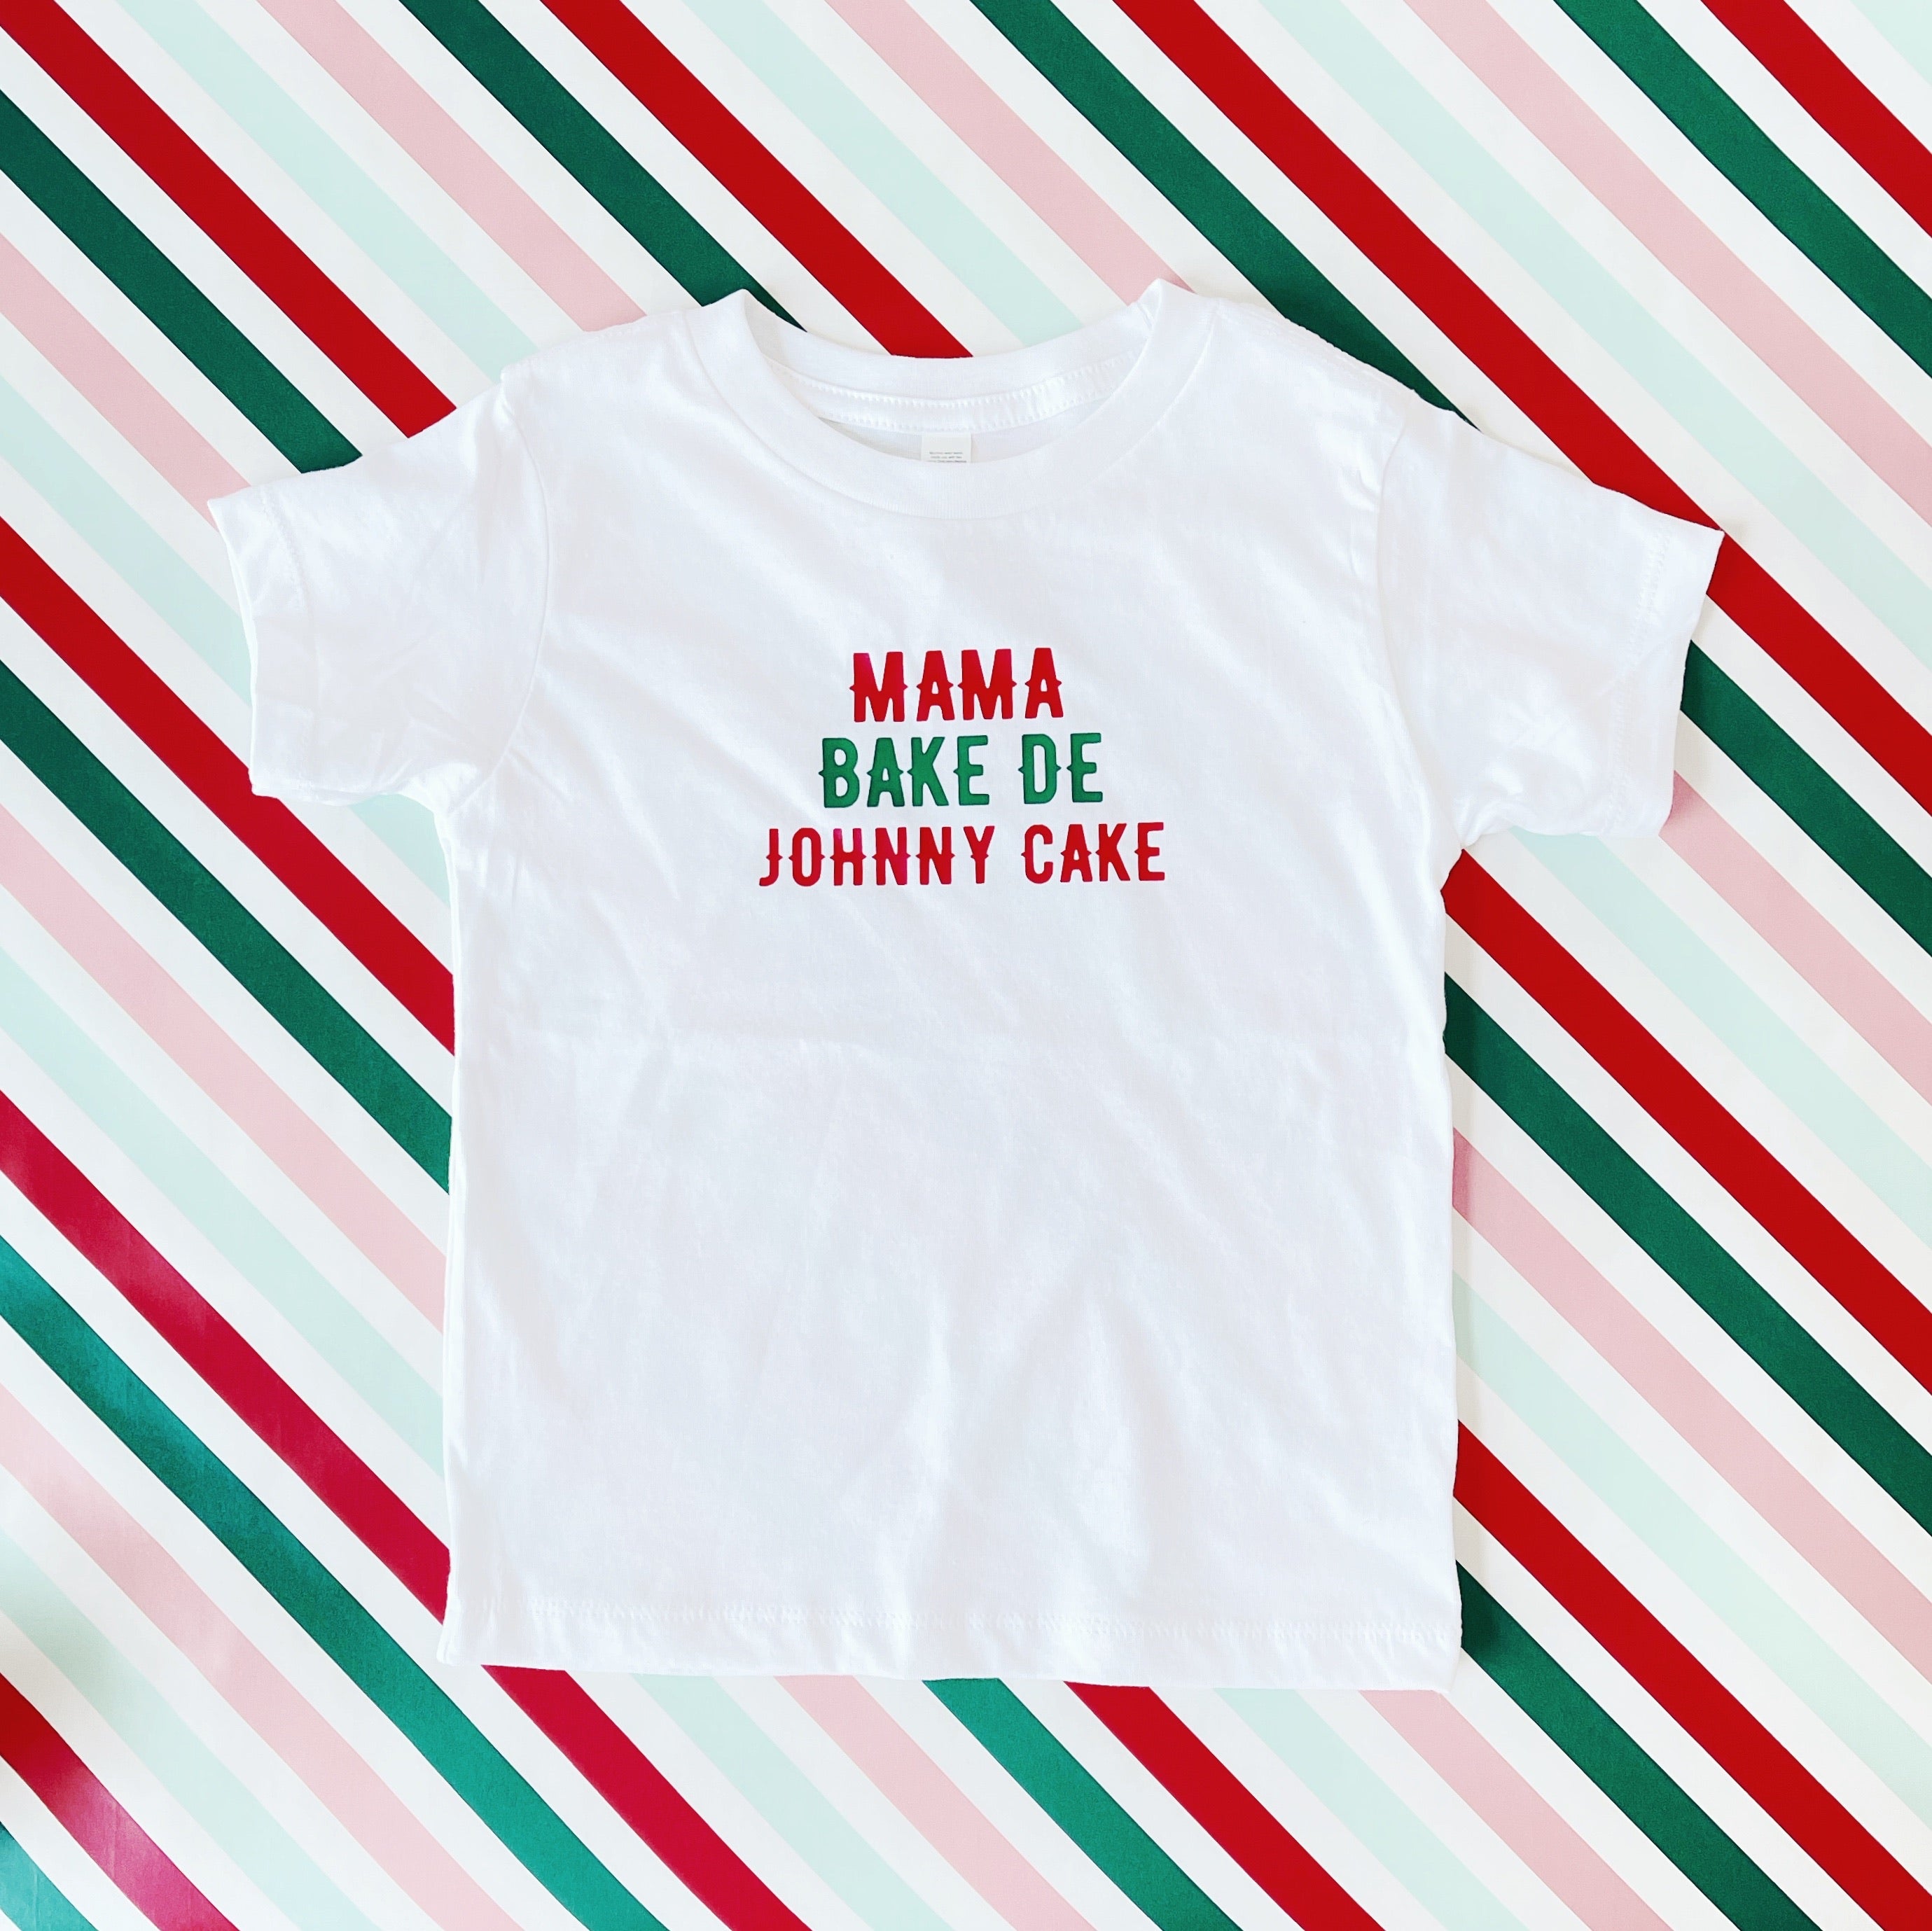 Mama Bake De Johnny Cake Tee - Limited Edition